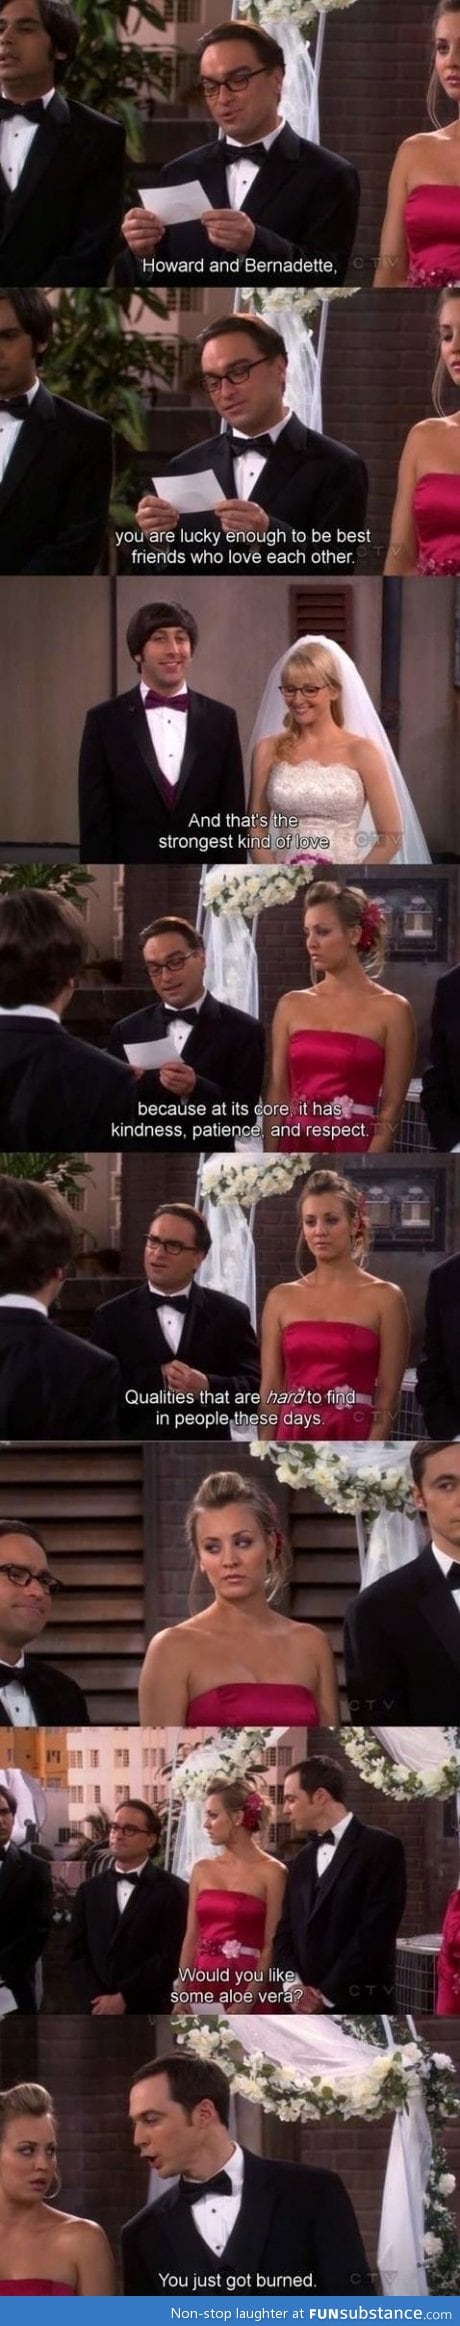 Just Sheldon